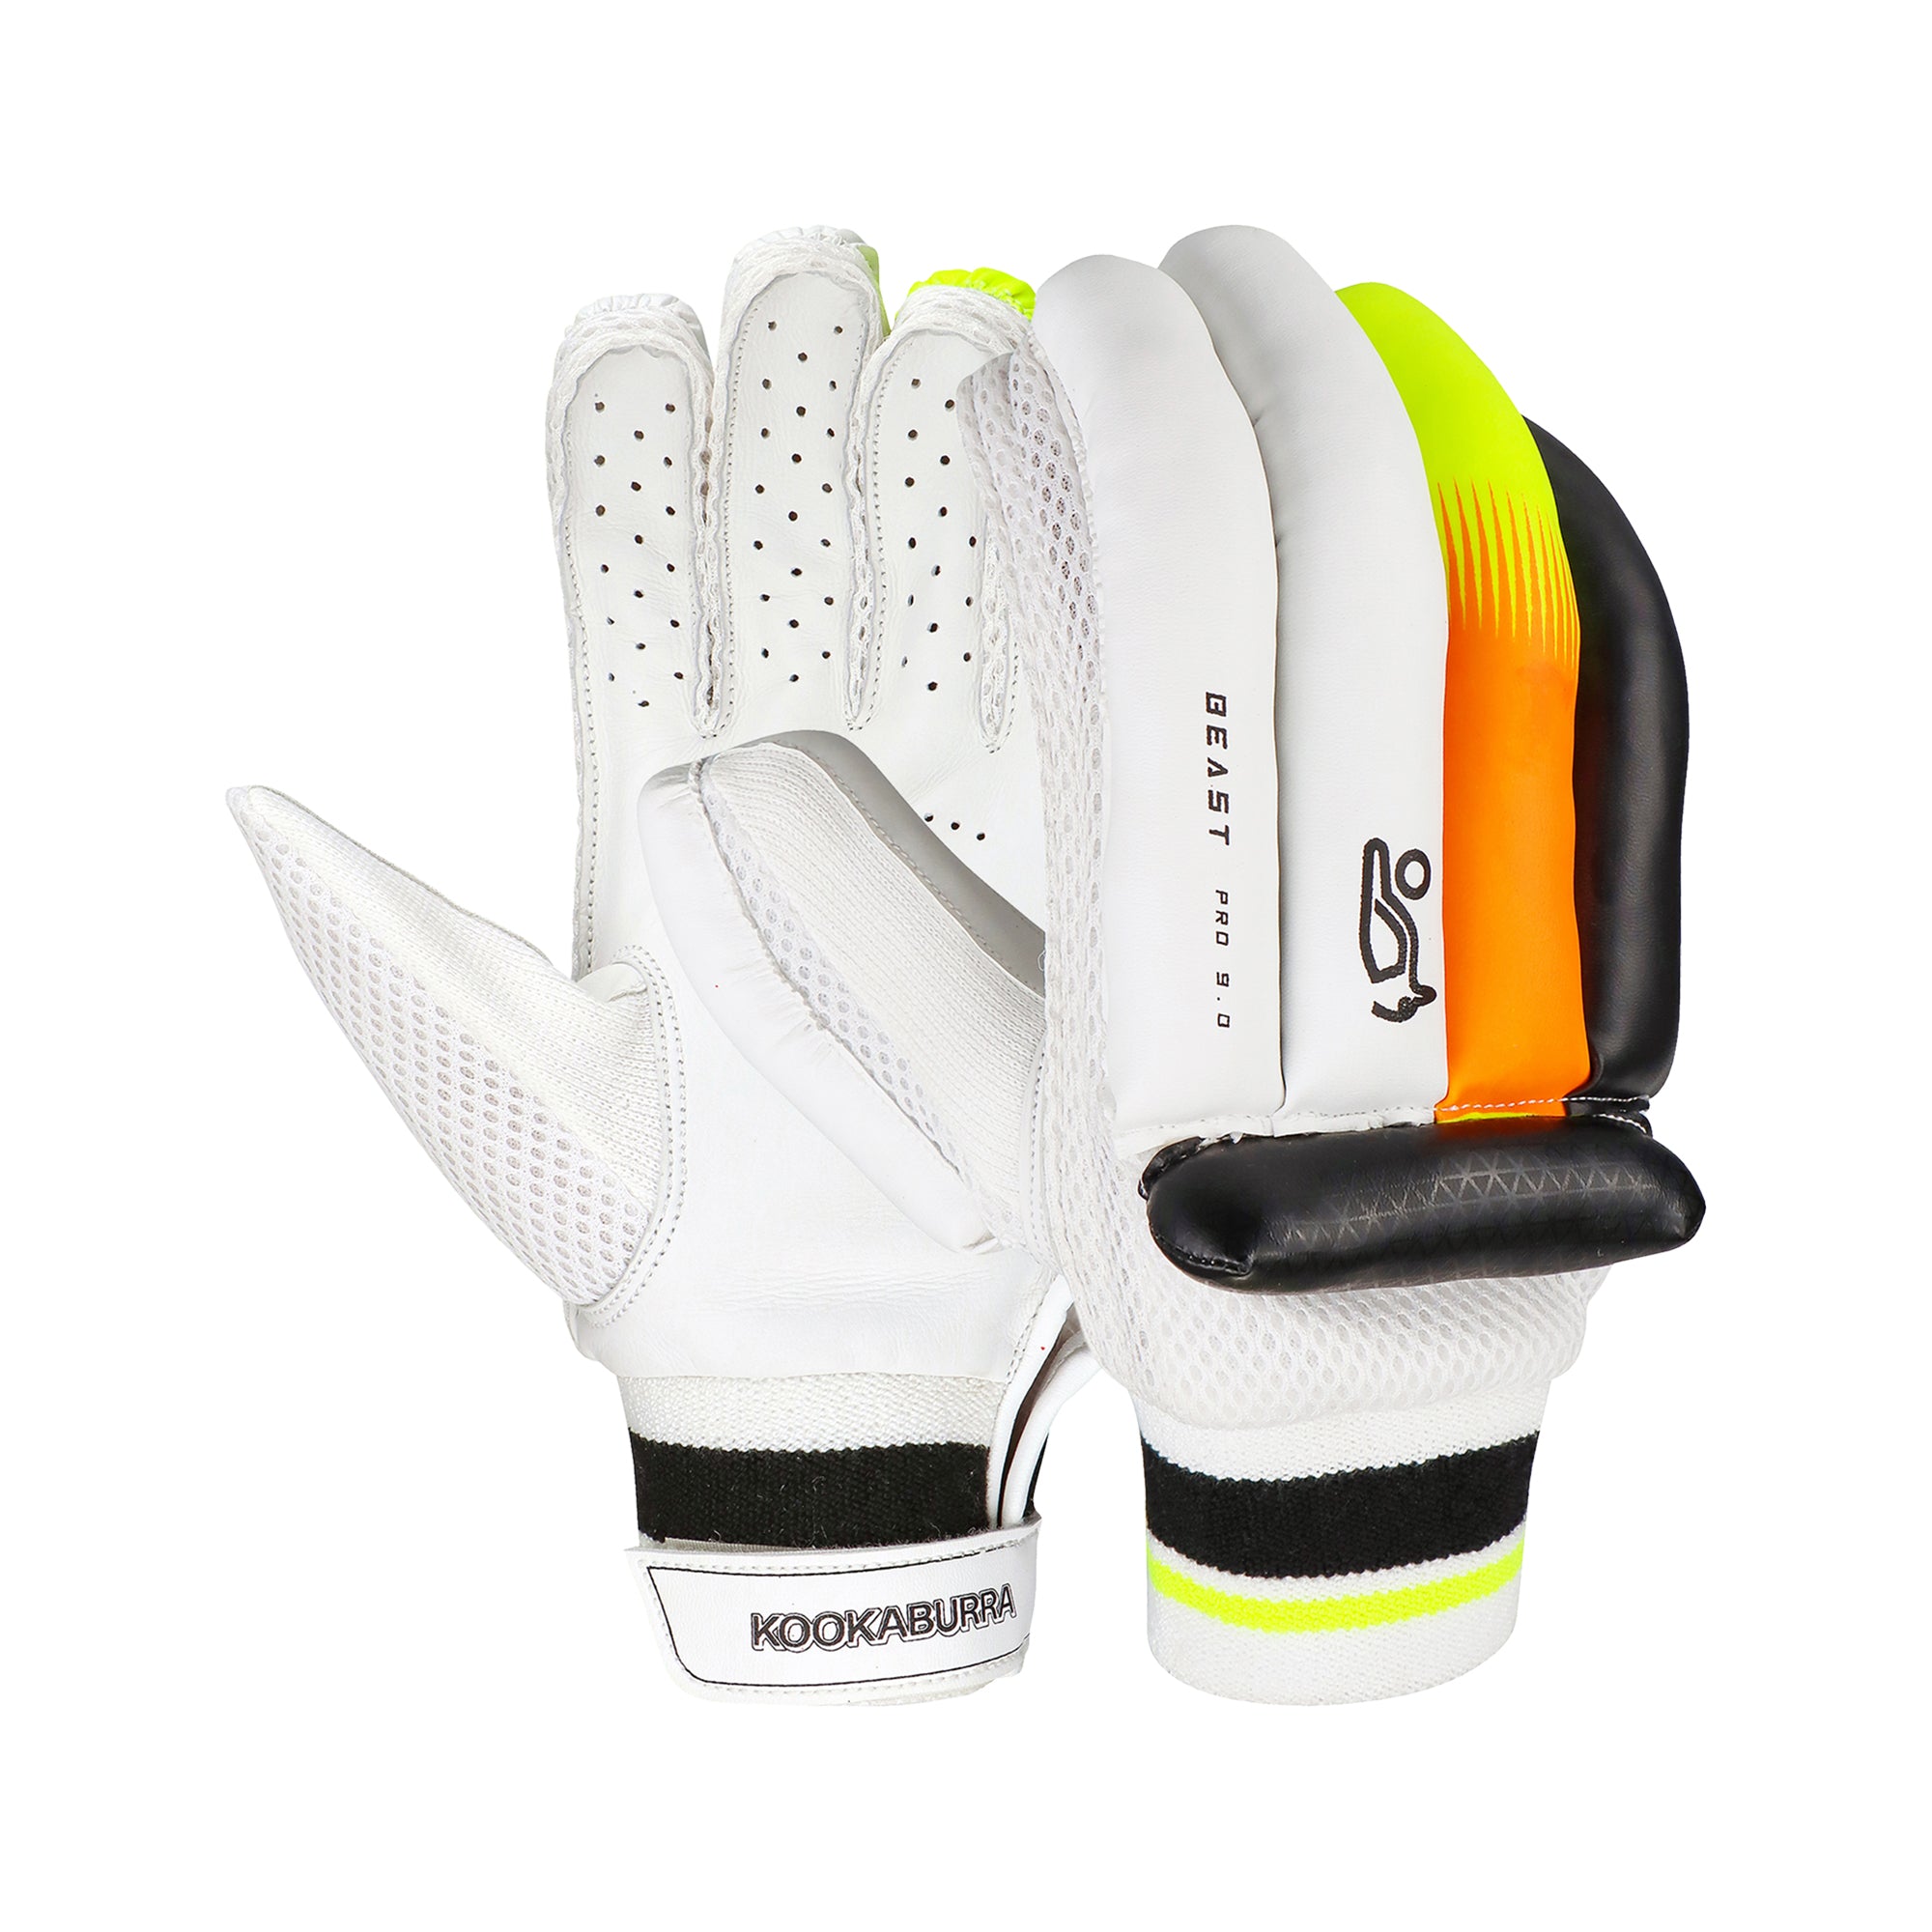 Kookaburra Beast Pro 9.0 Batting Gloves